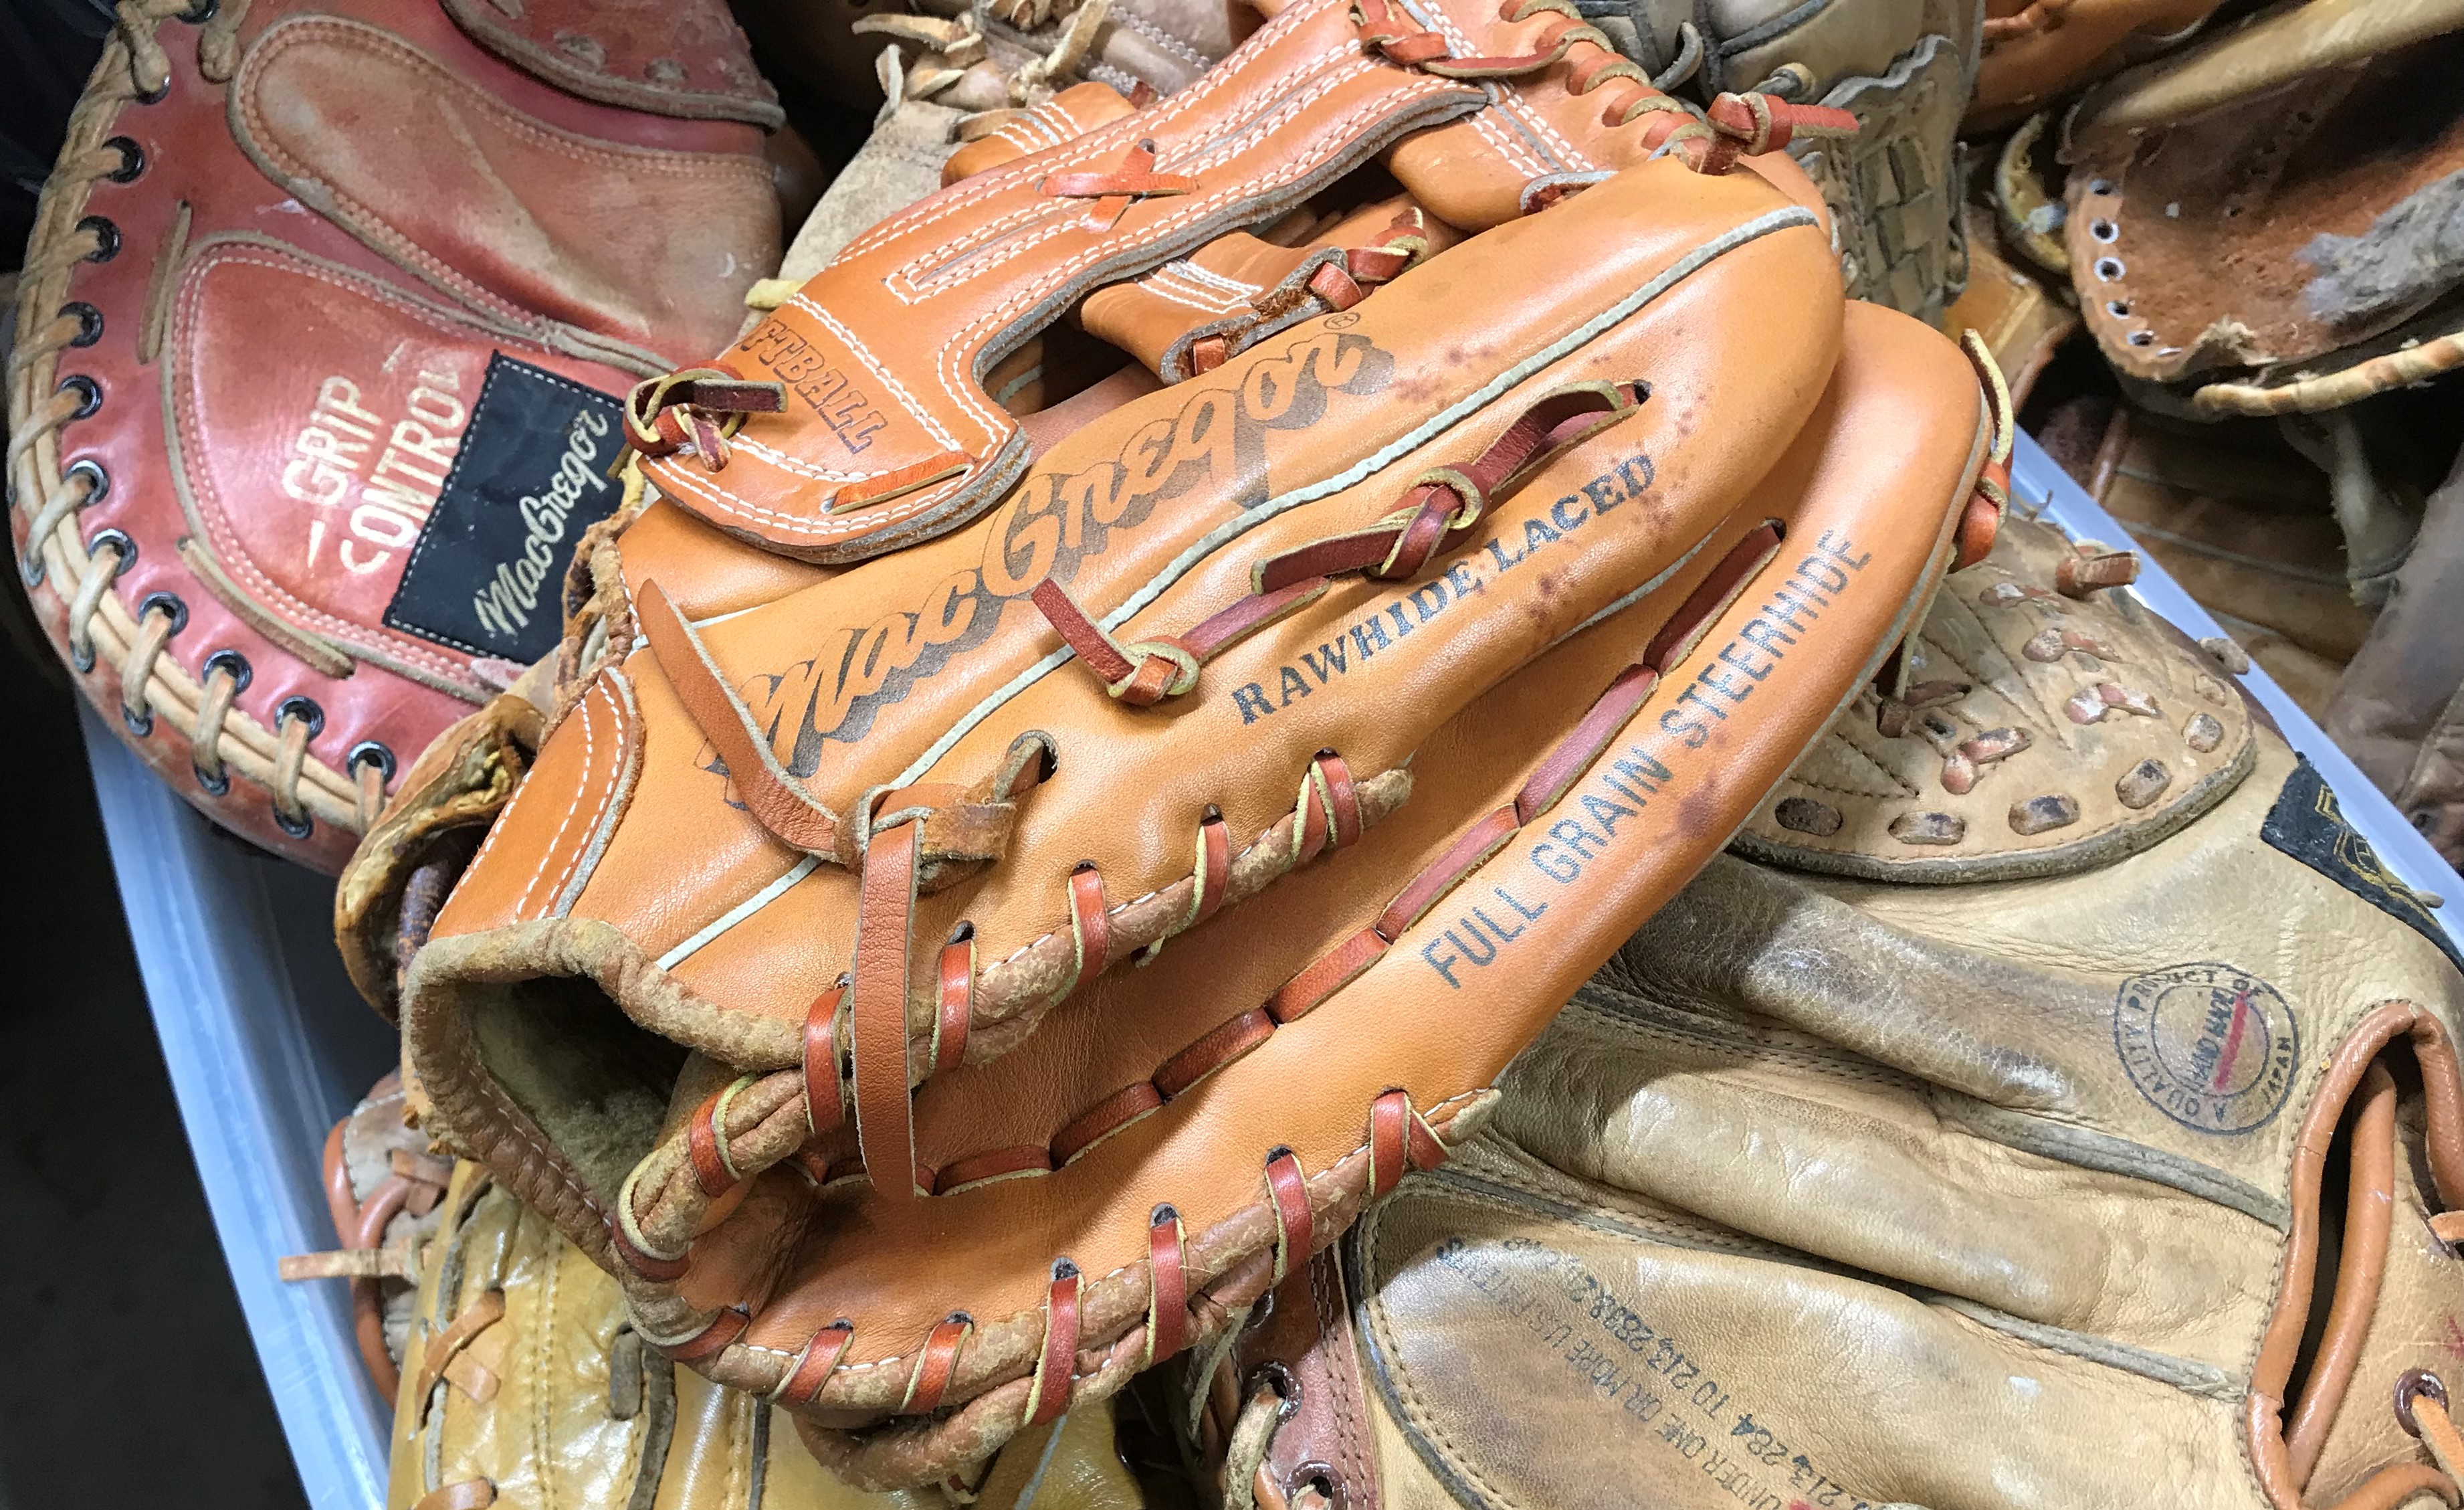 Billfold Baseball Glove Wallet : Louisville – Yurko Sports